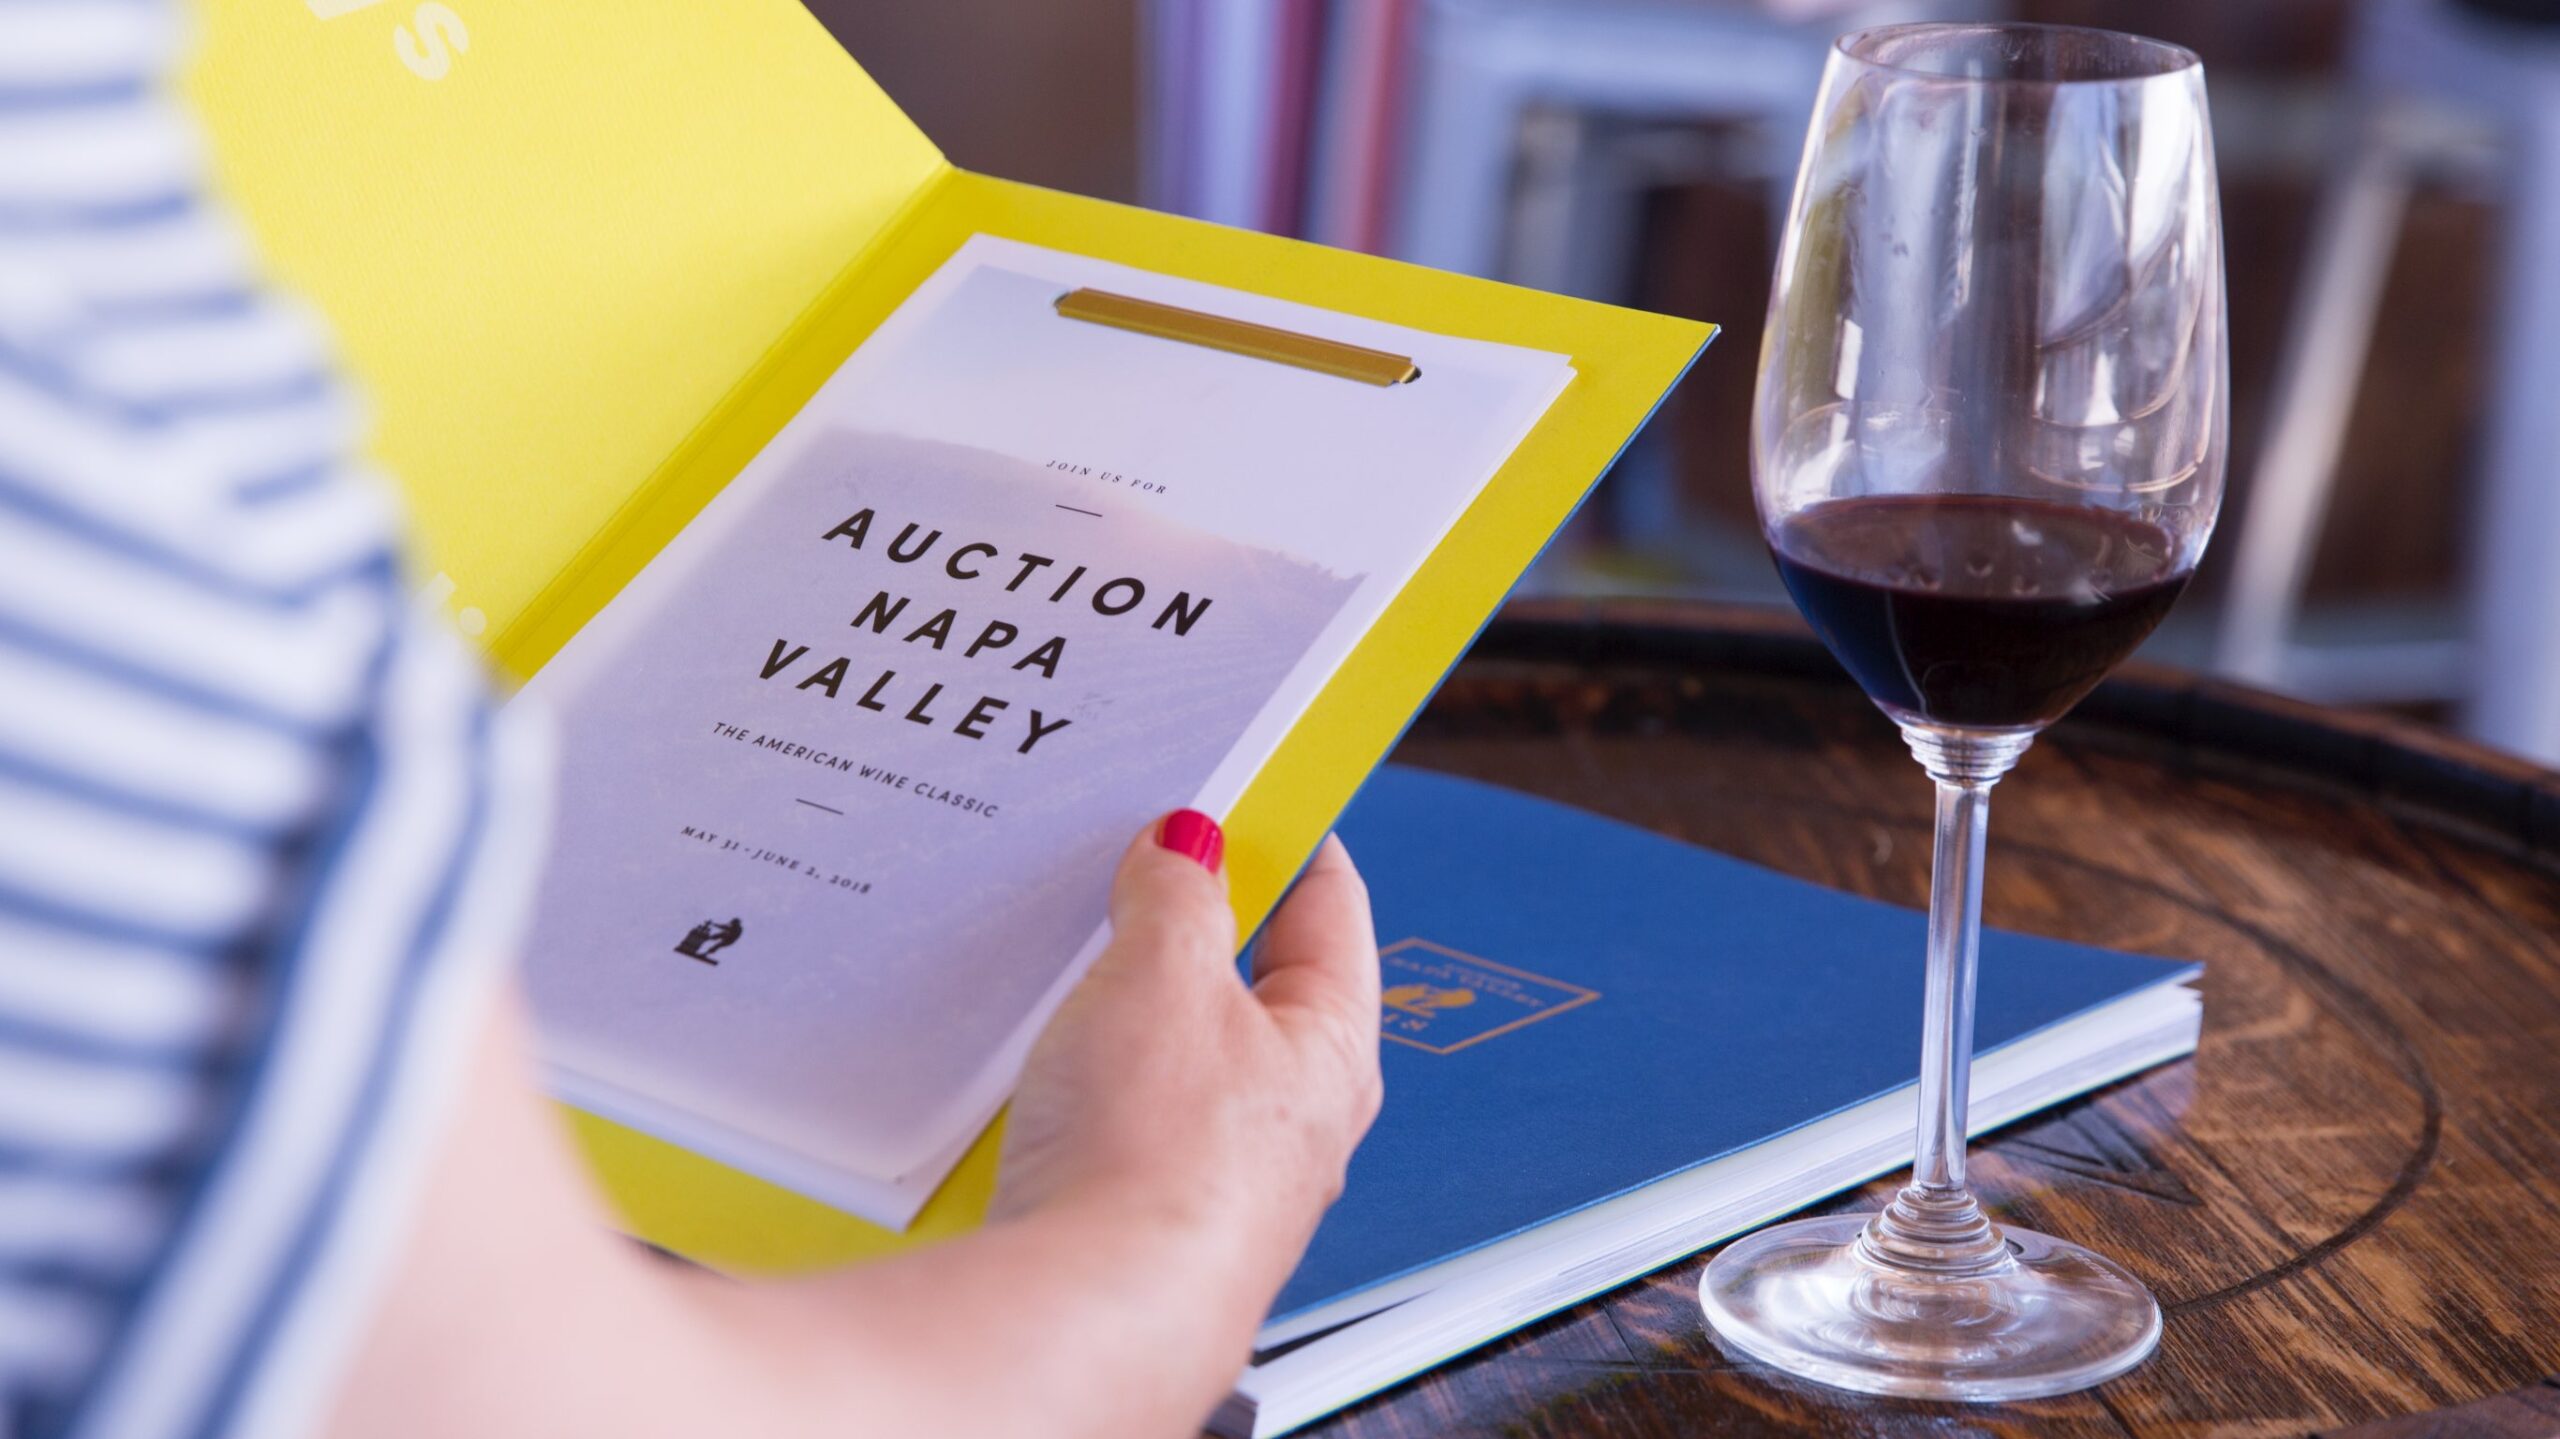 Auction Napa Valley 2018 invite